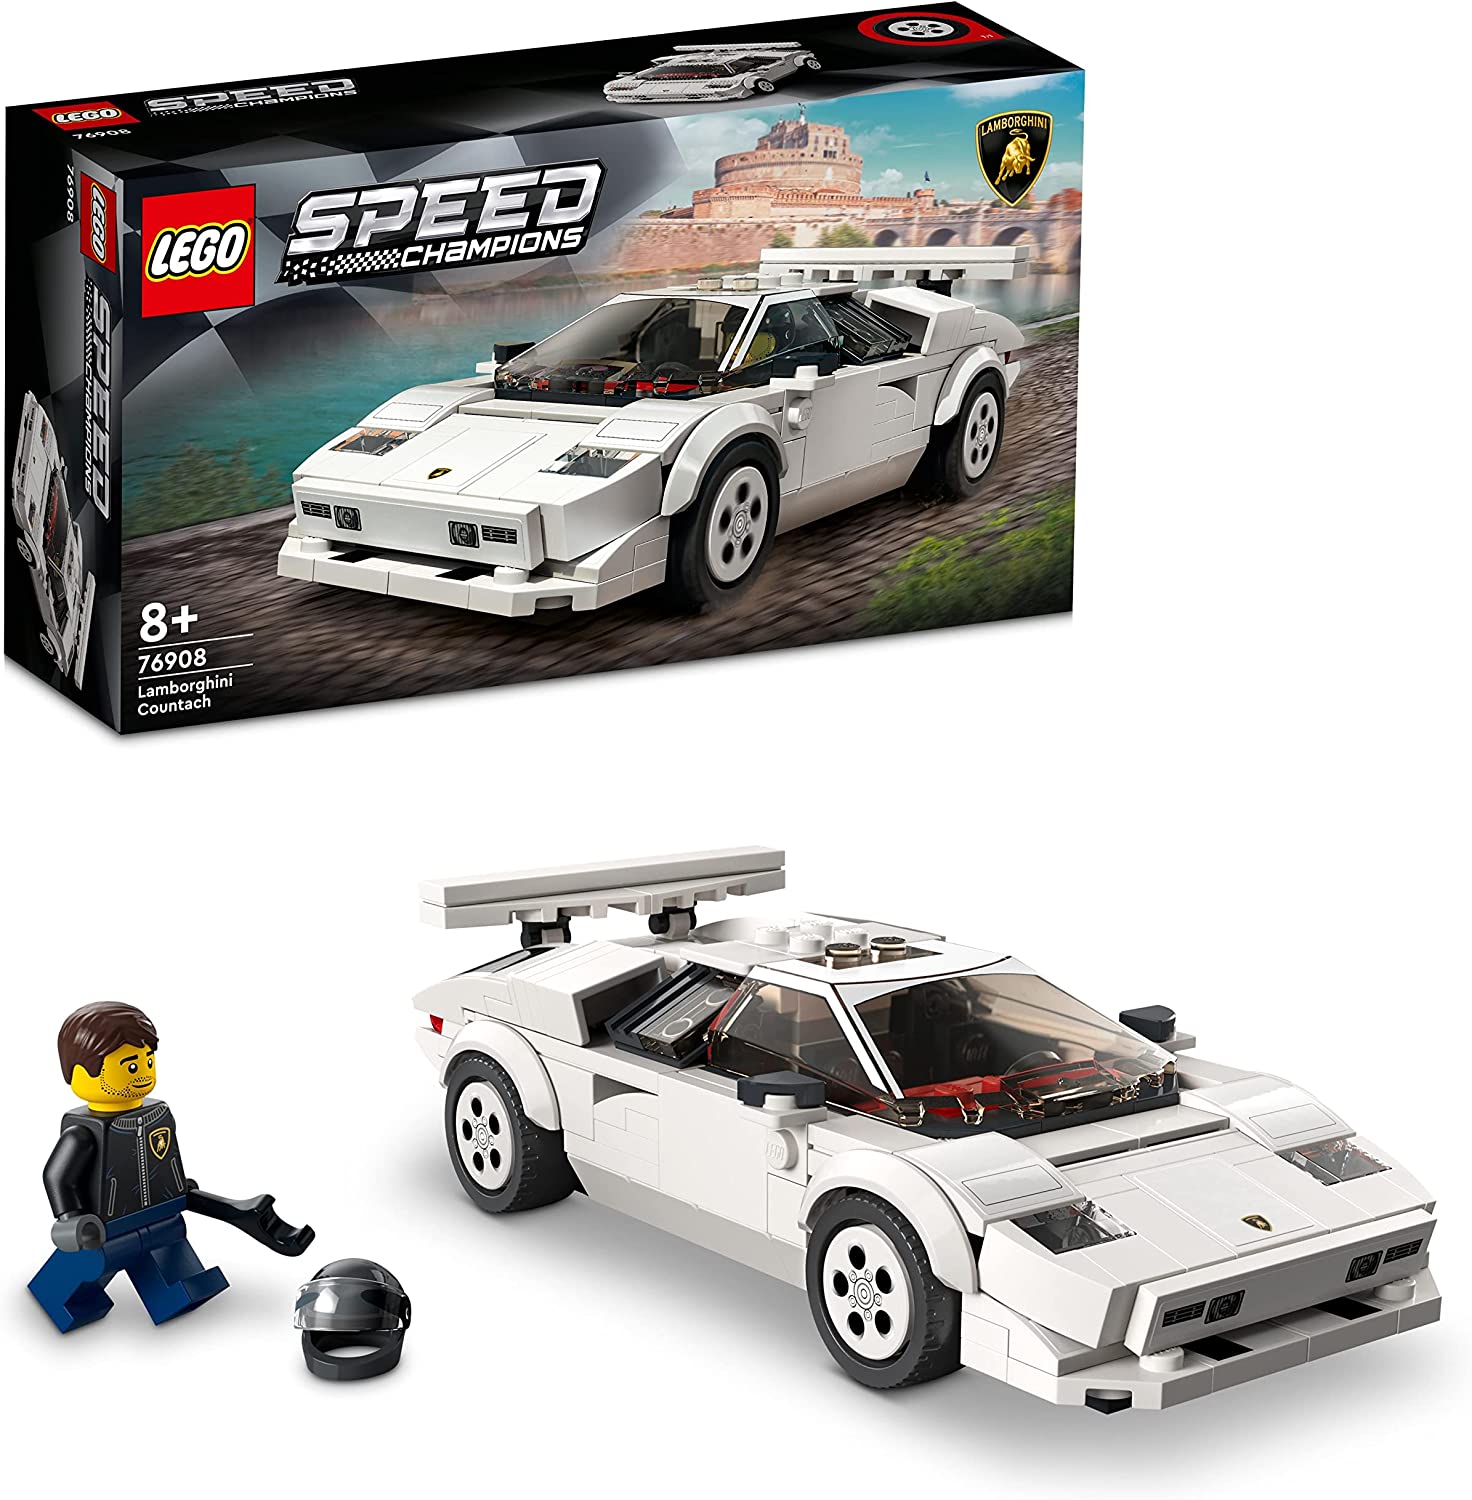 LEGO 76908 Speed Champions Lamborghini Countach Construction Kit for Model 